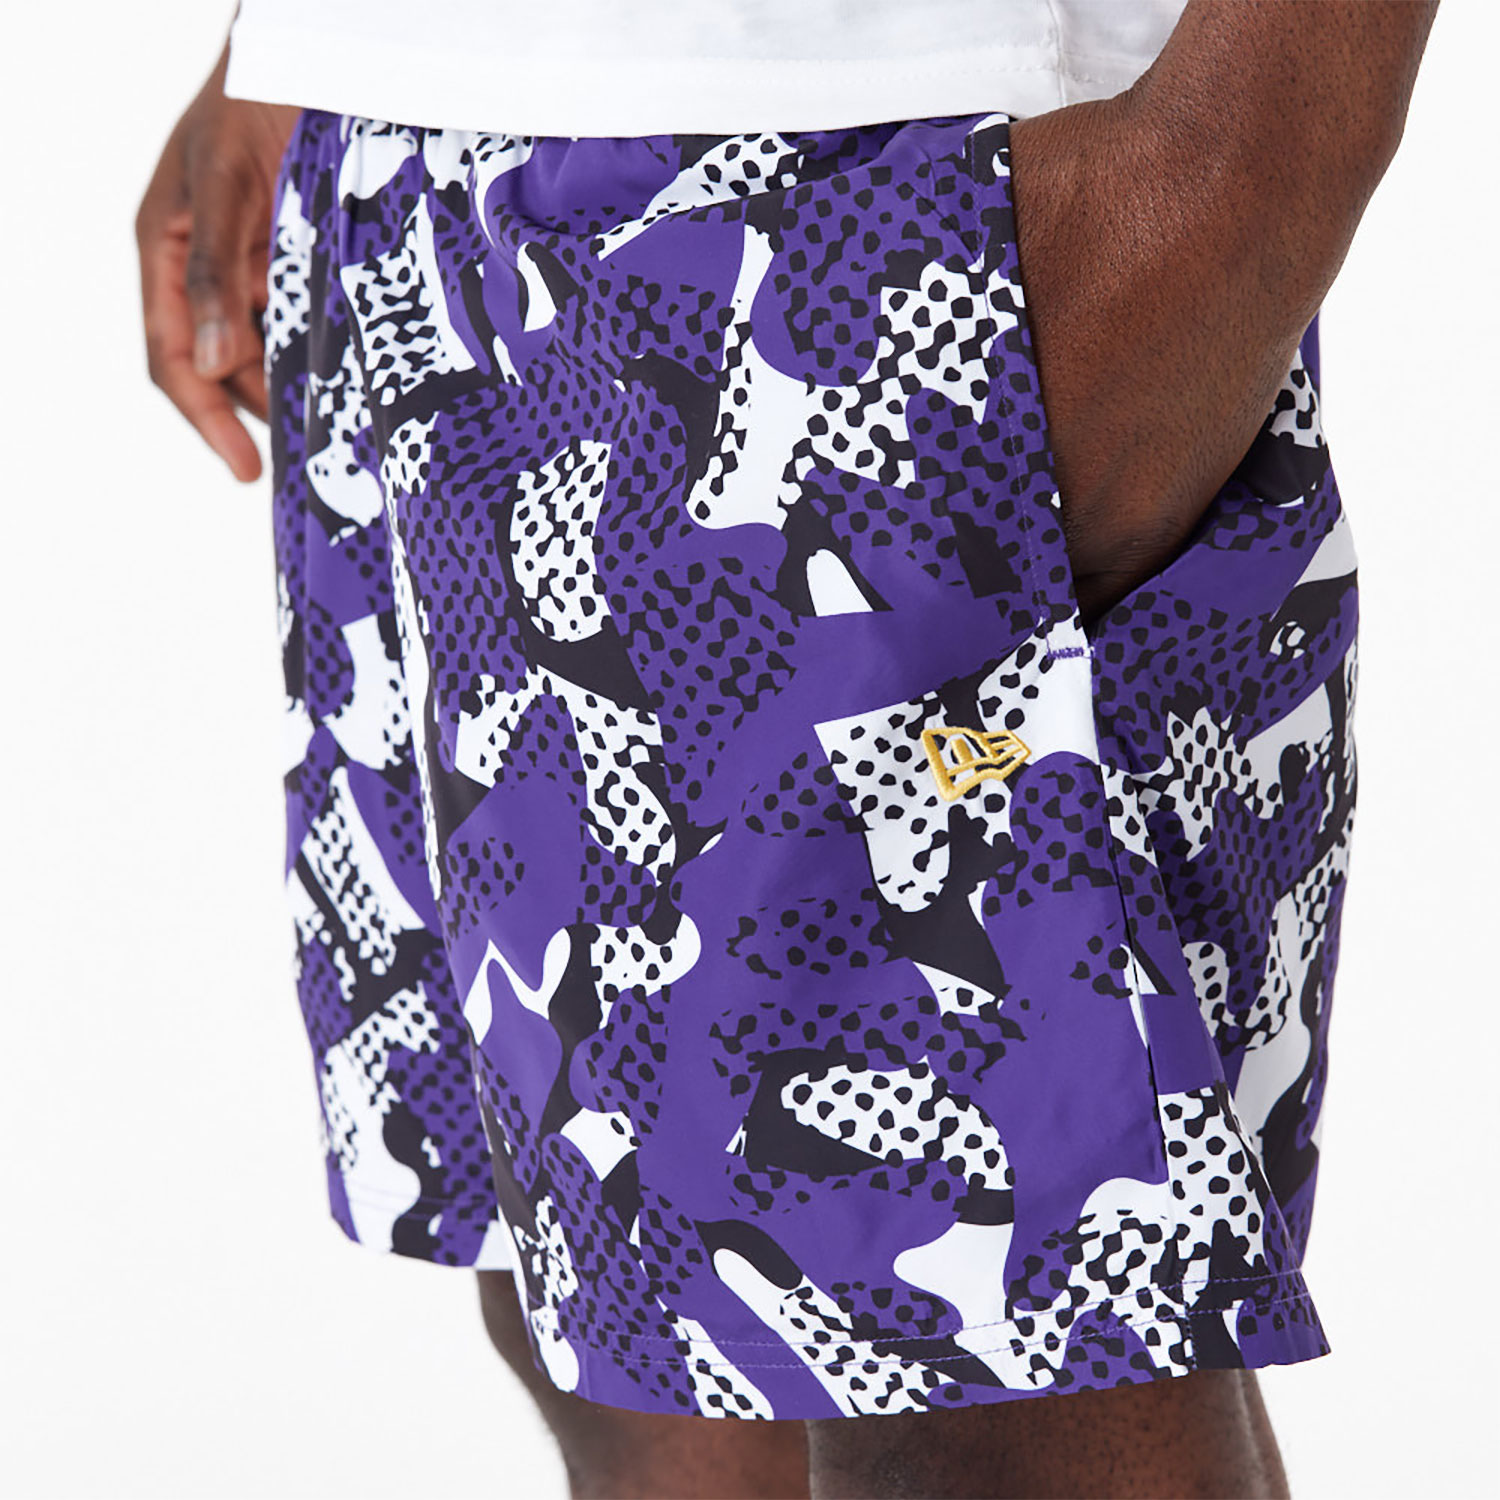 LA Lakers NBA Team All Over Print Purple Shorts